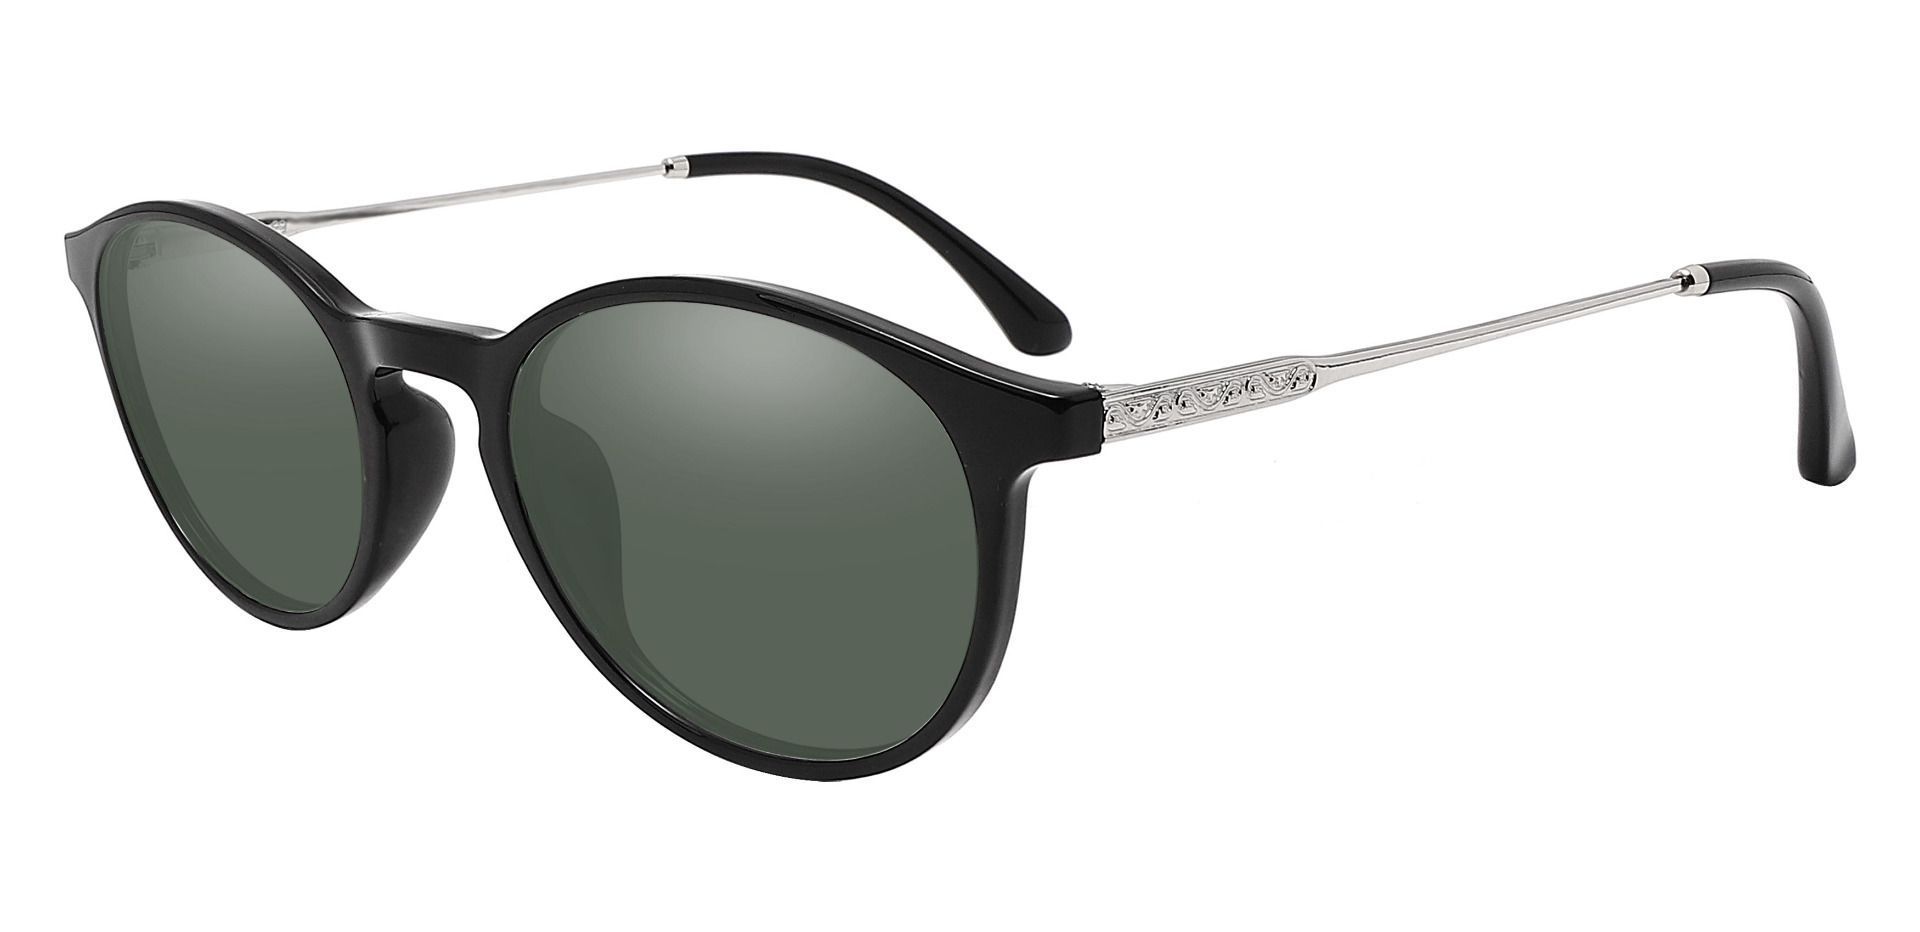 Felton Oval Non-Rx Sunglasses - Black Frame With Green Lenses